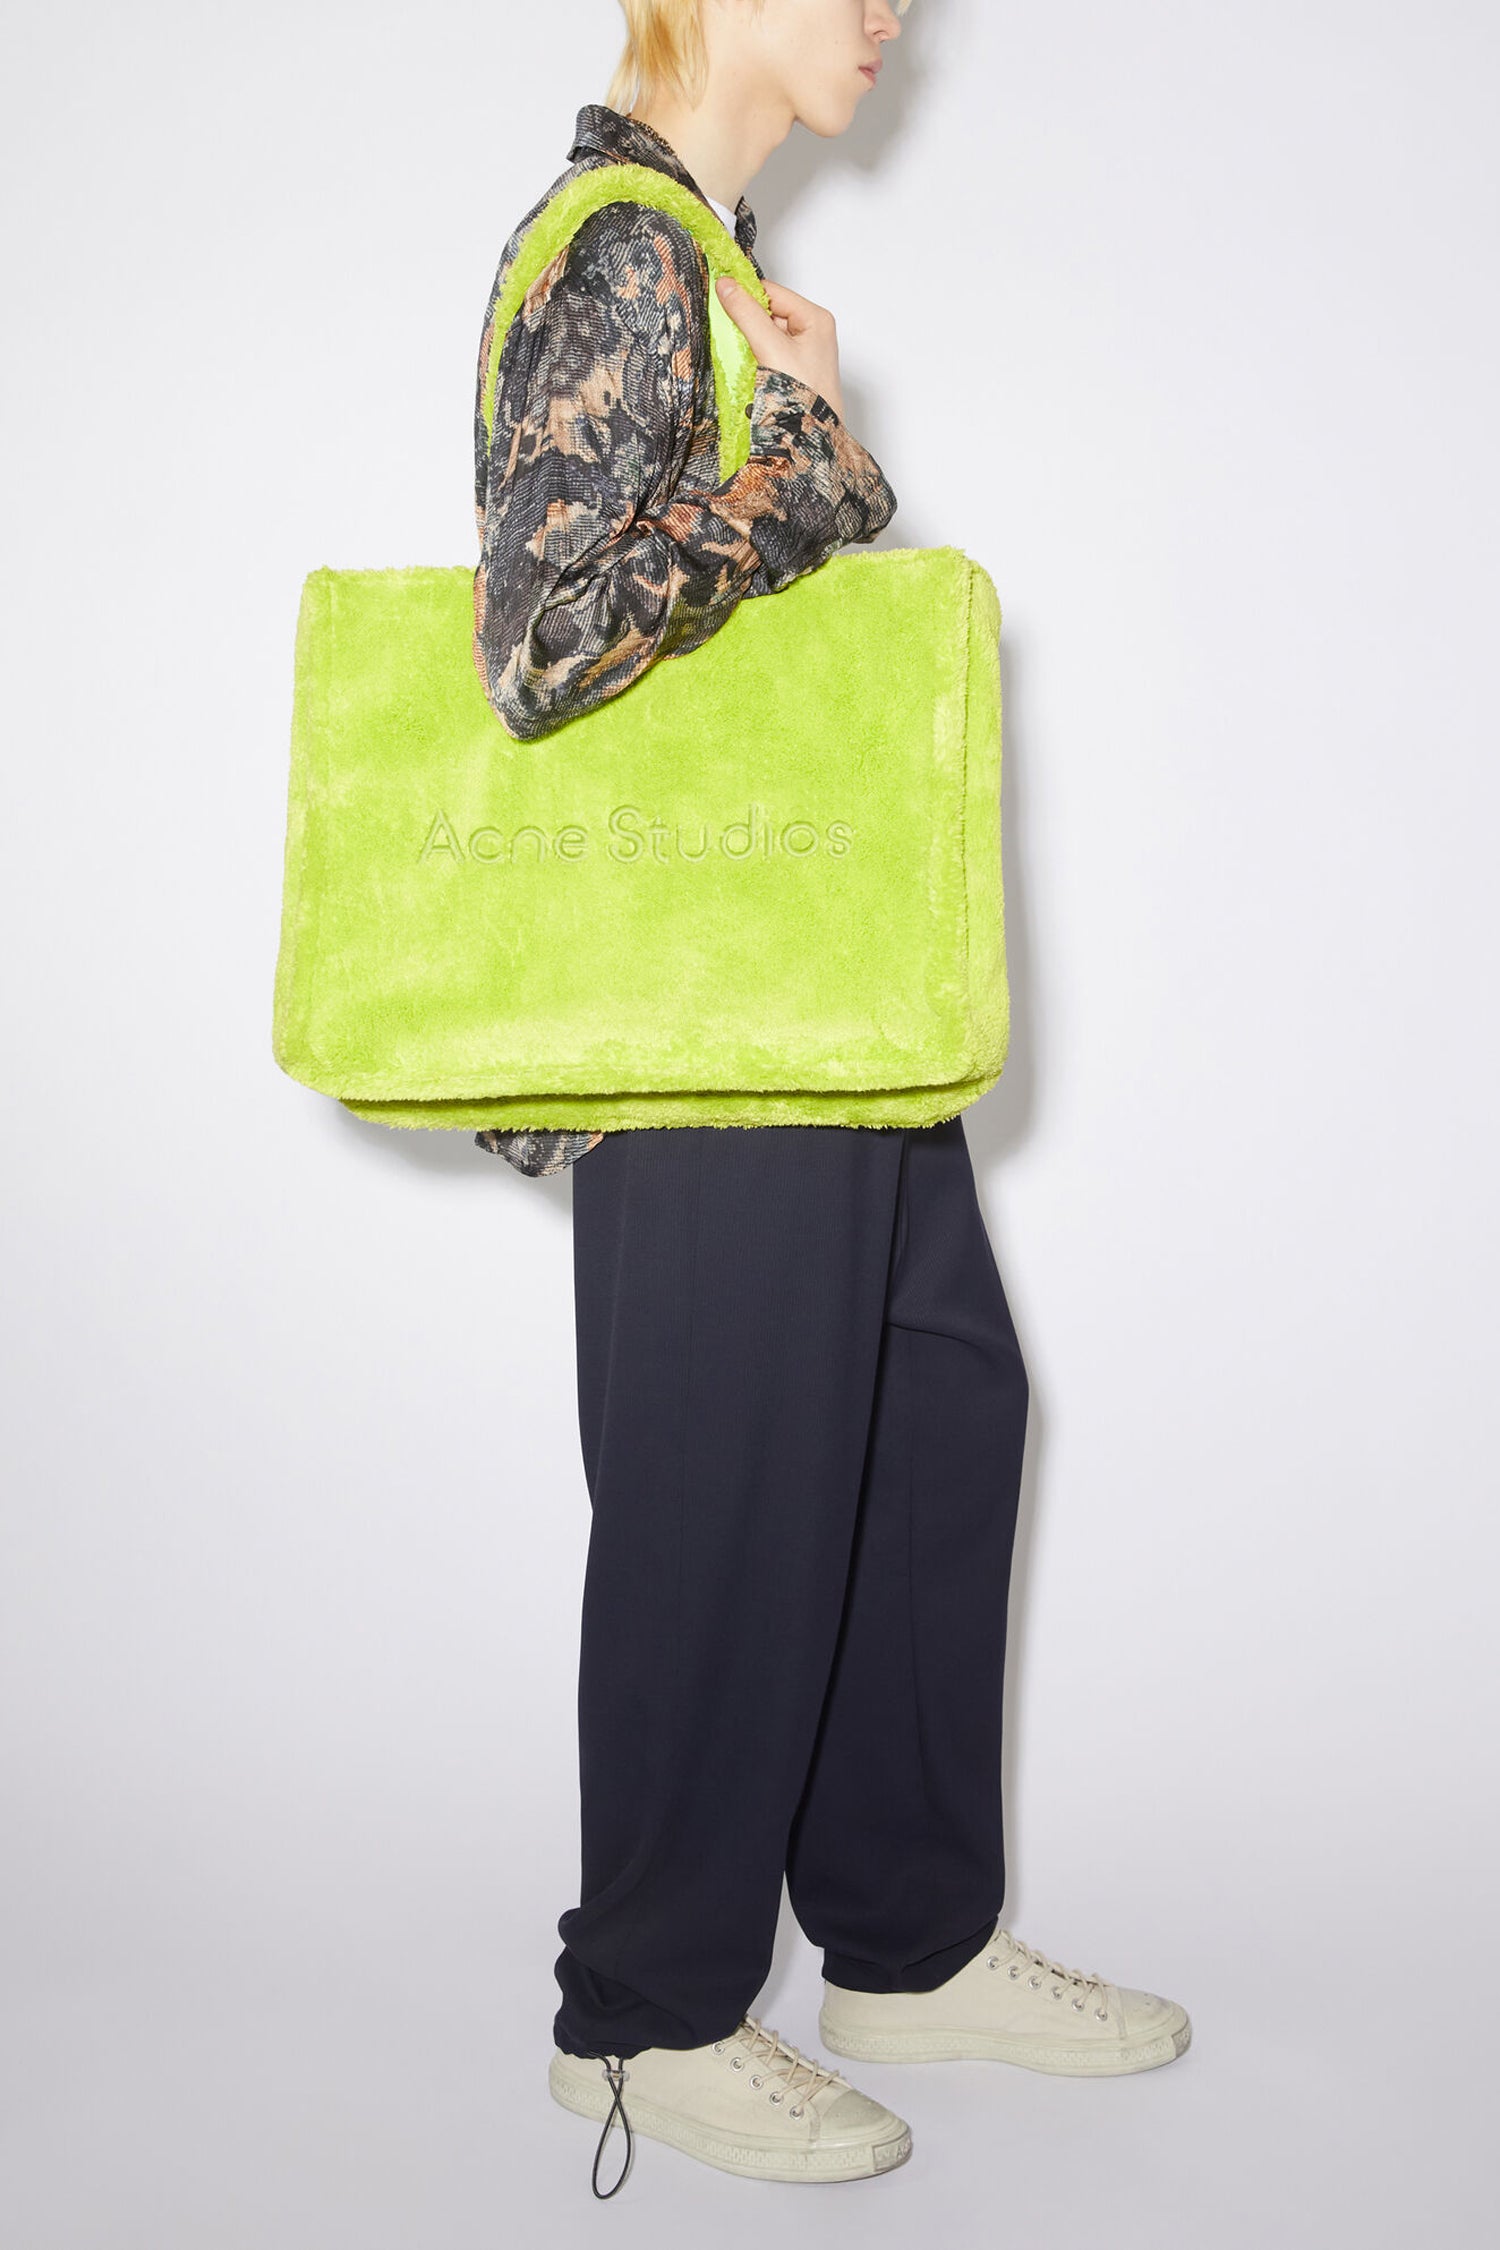 Acne Studios Women's Multi-Pocket Leather Shoulder Bag in Black | LN-CC®